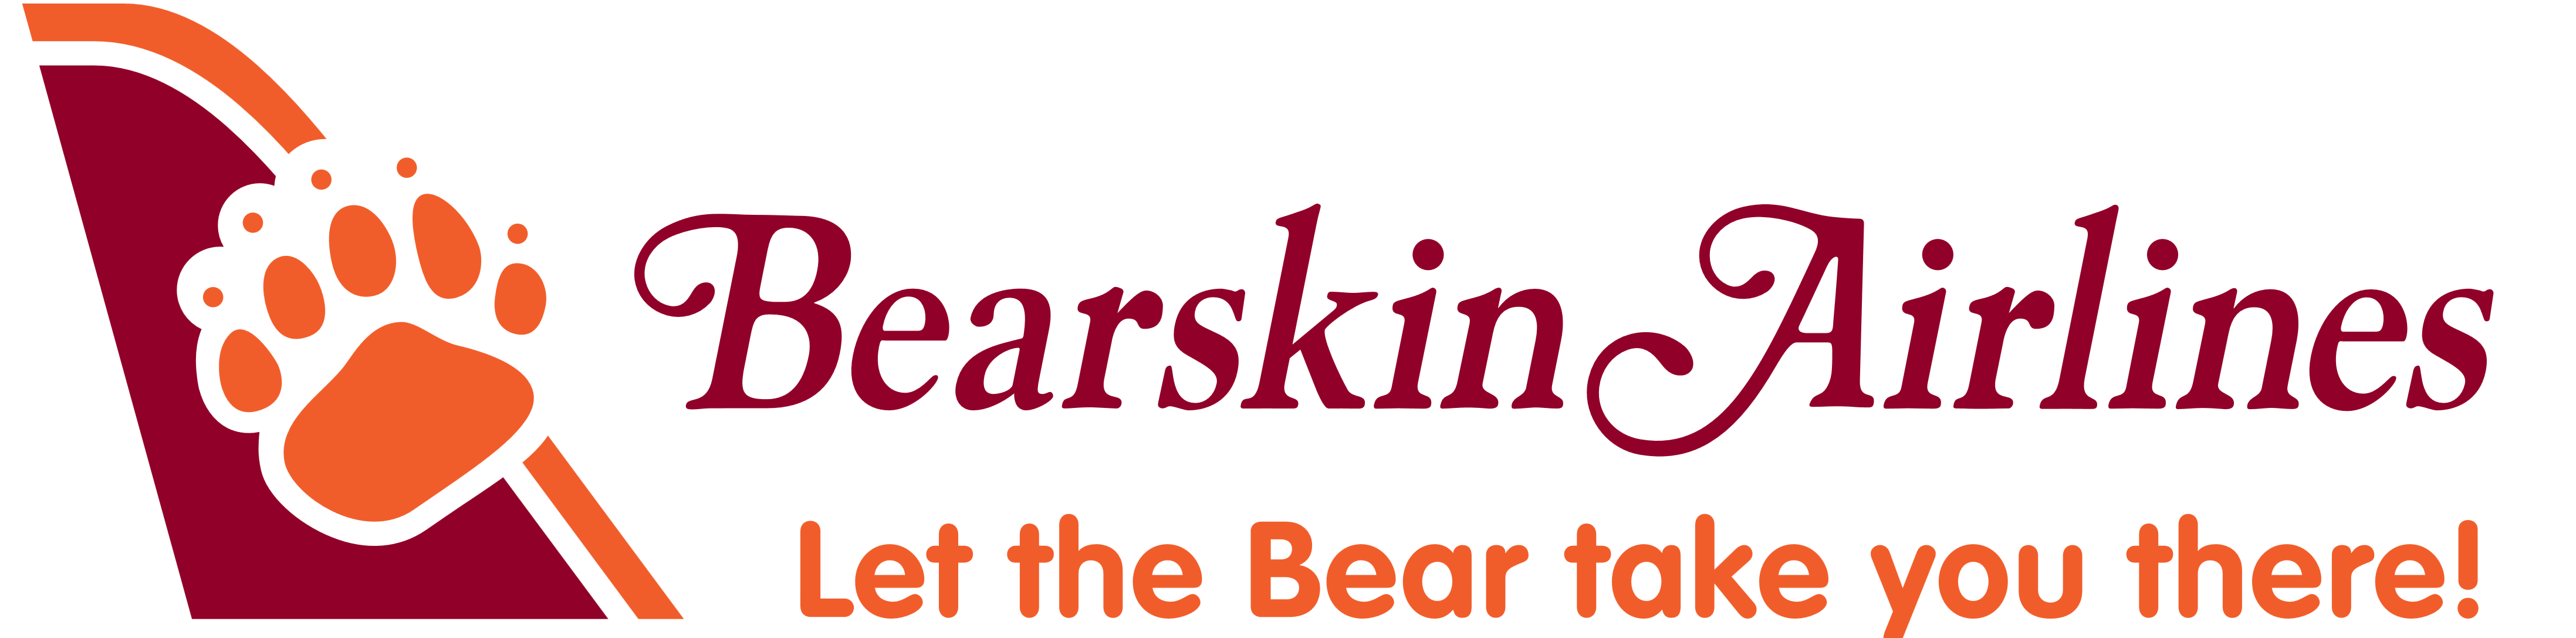 Bearskin Airlines logo, logotype